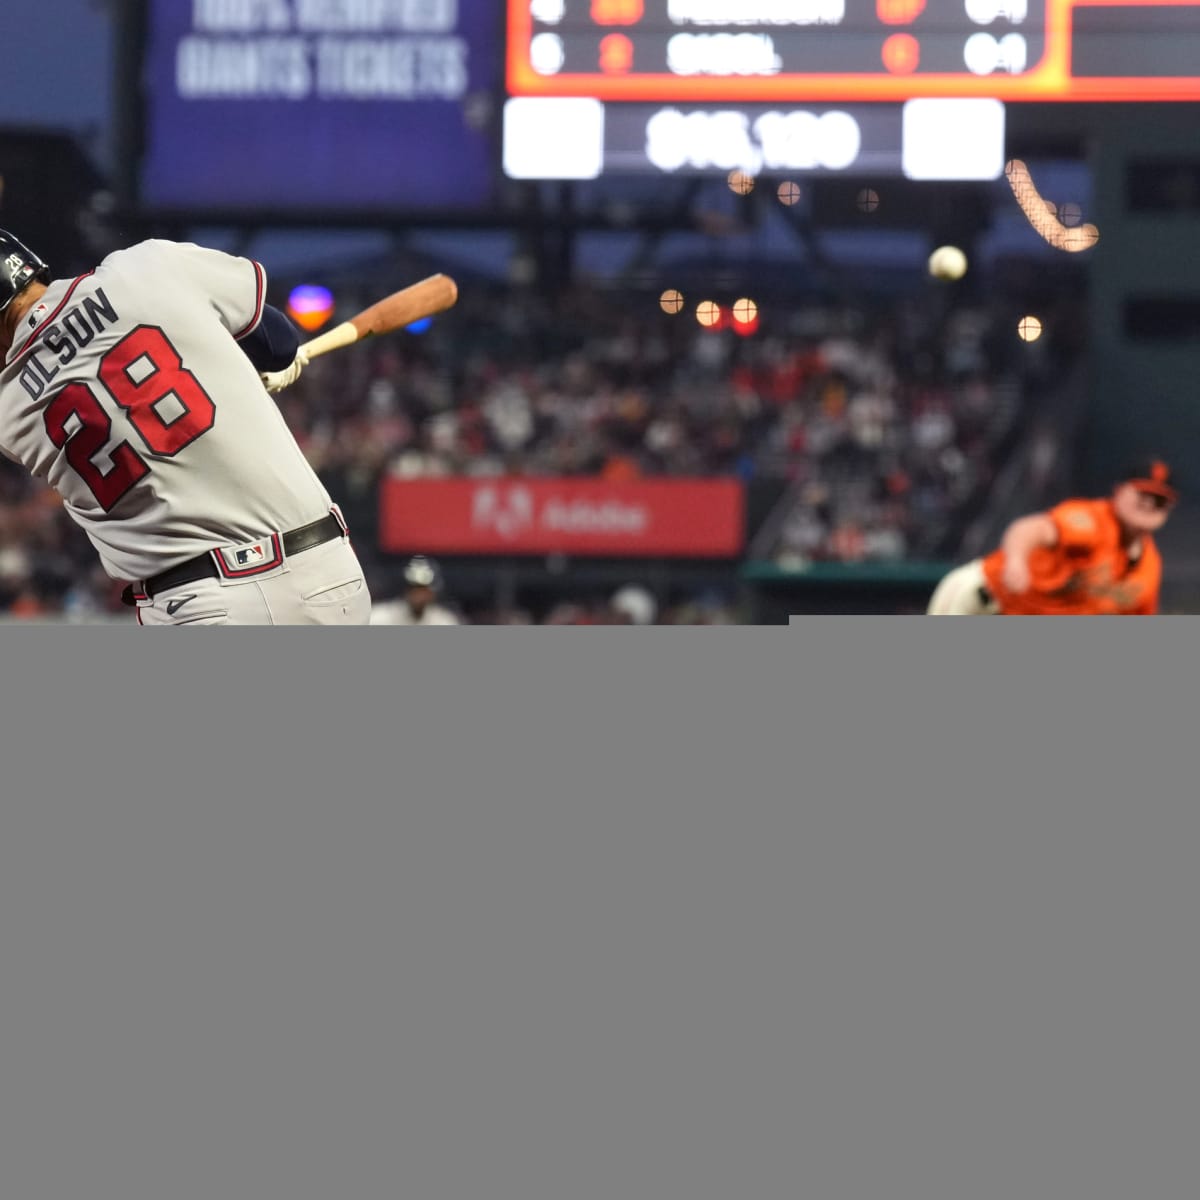 Matt Olson breaks Braves' home run record: Watch first baseman